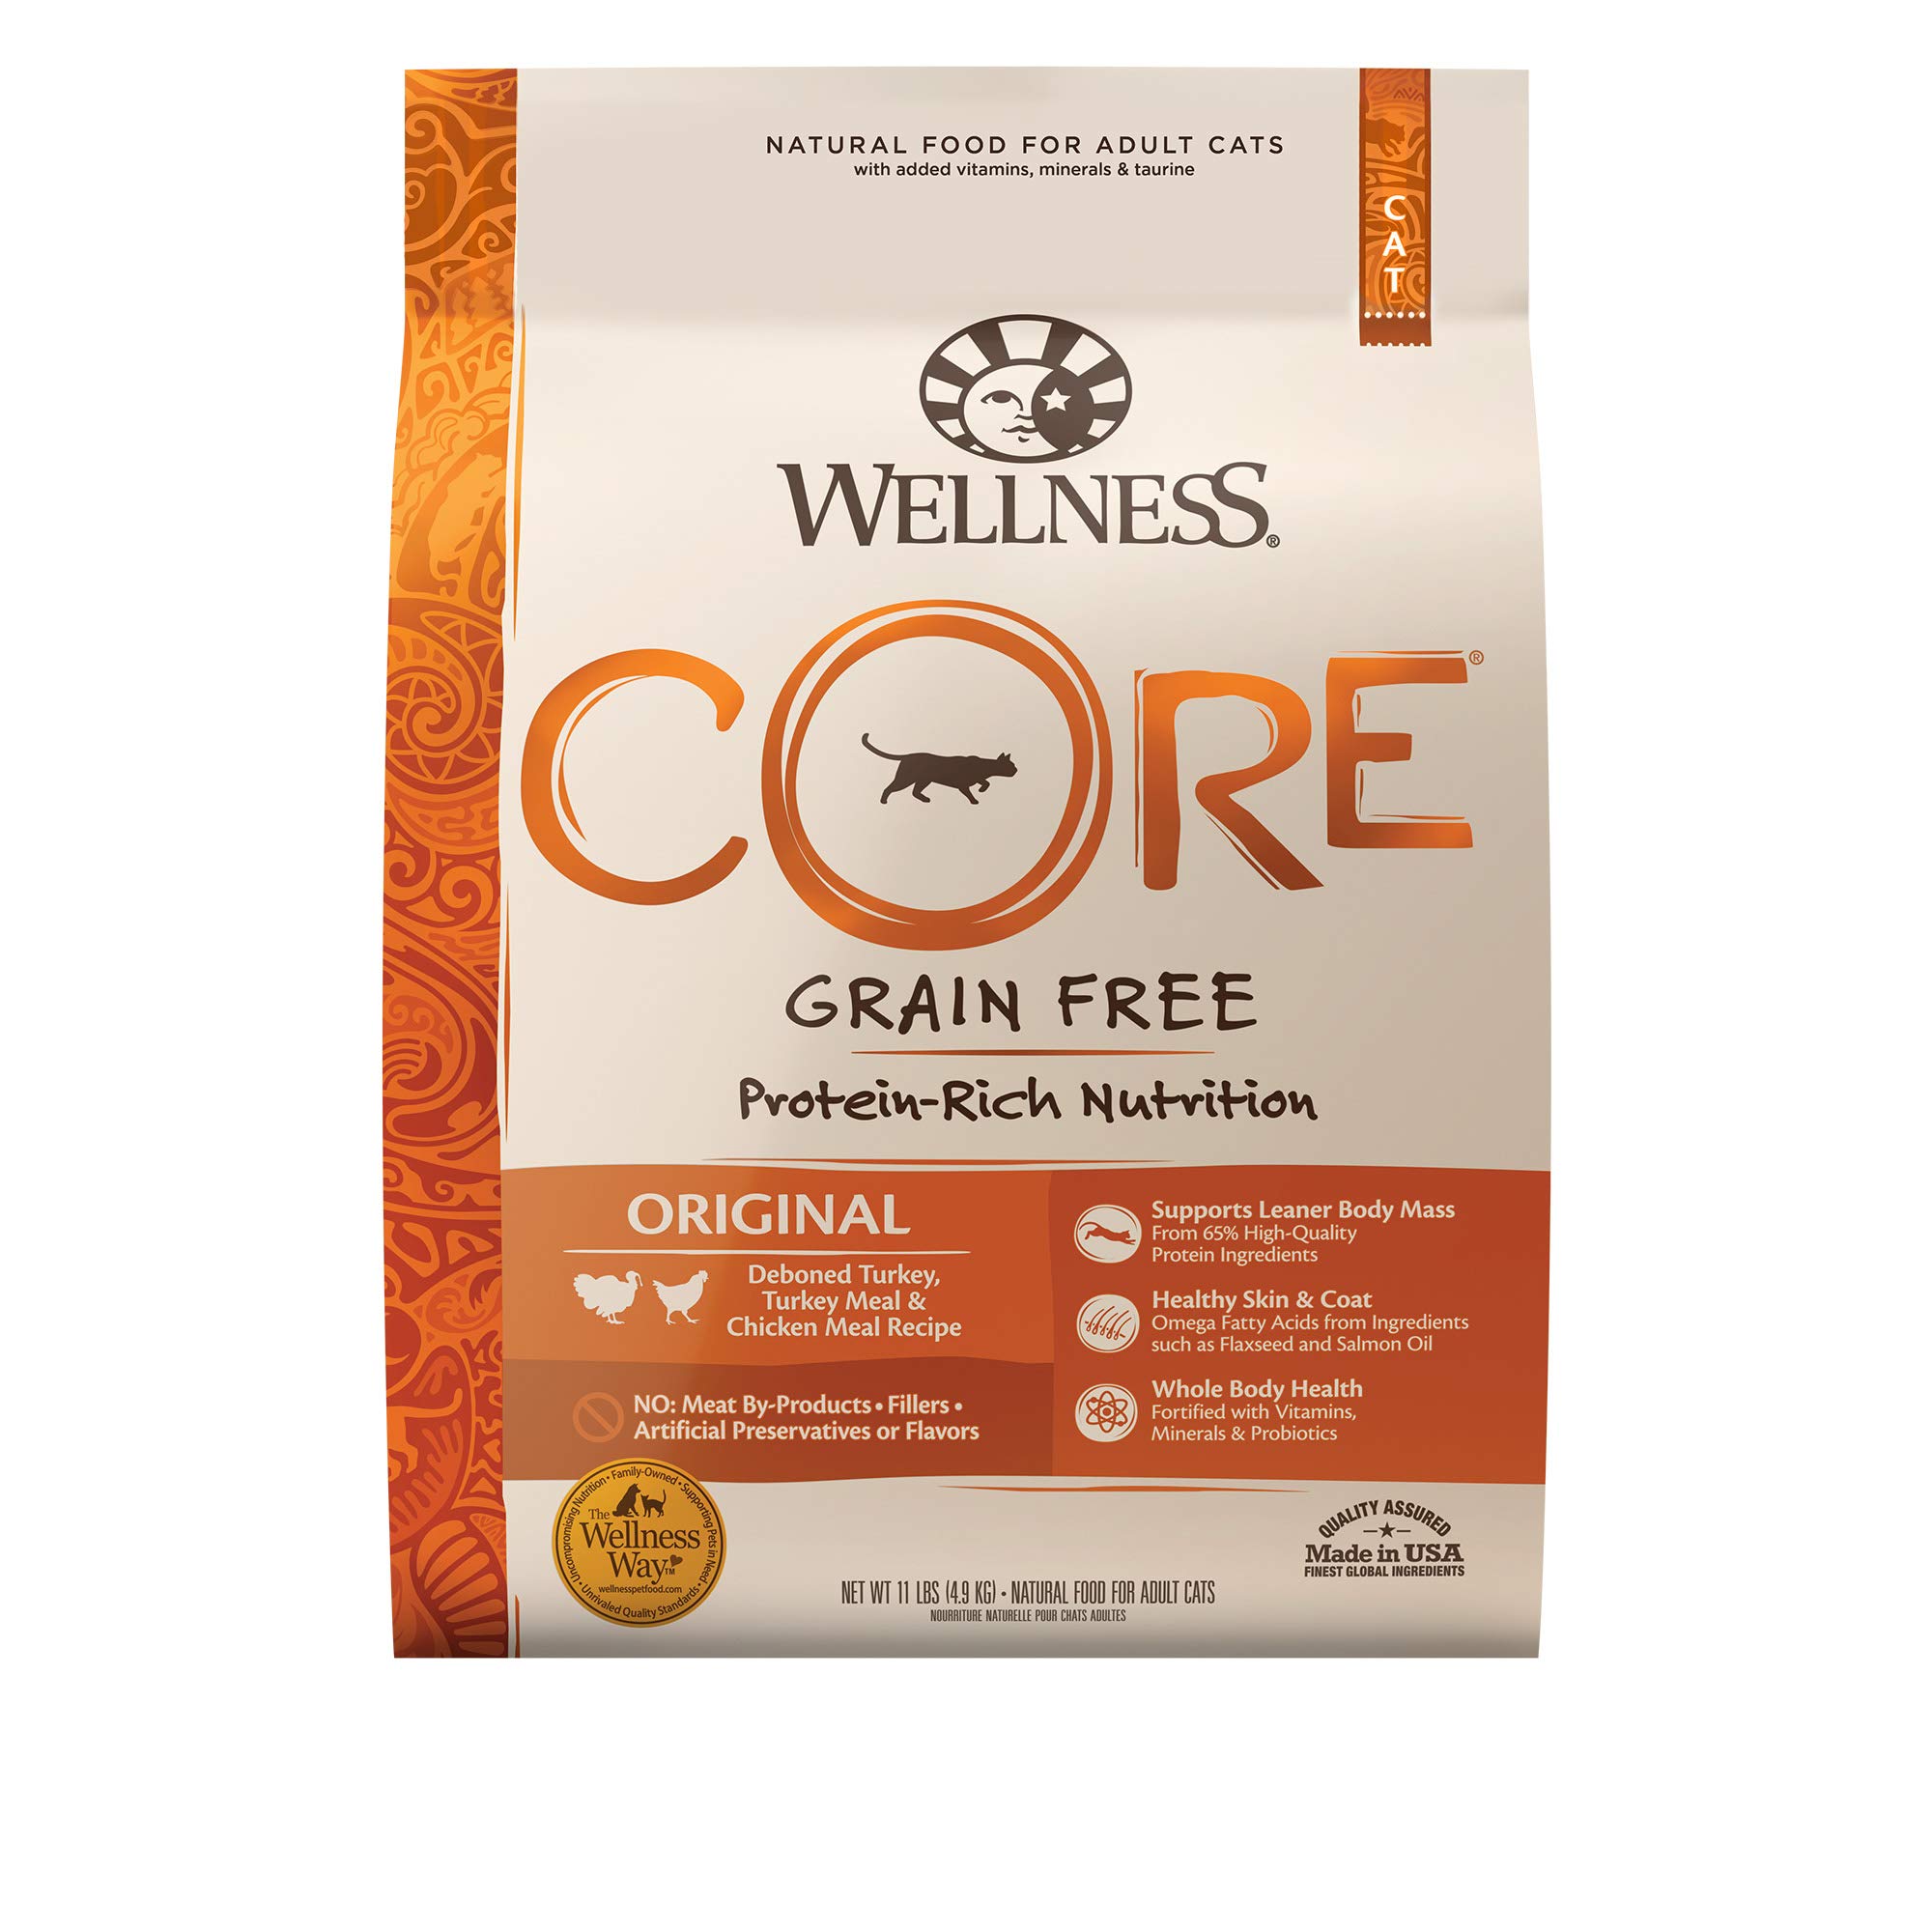 Wellness CORE High Protein Grain-Free Adult Dry Cat Food, Original Formula Turkey, Turkey Meal & Chicken Recipe, 11 Pound Bag